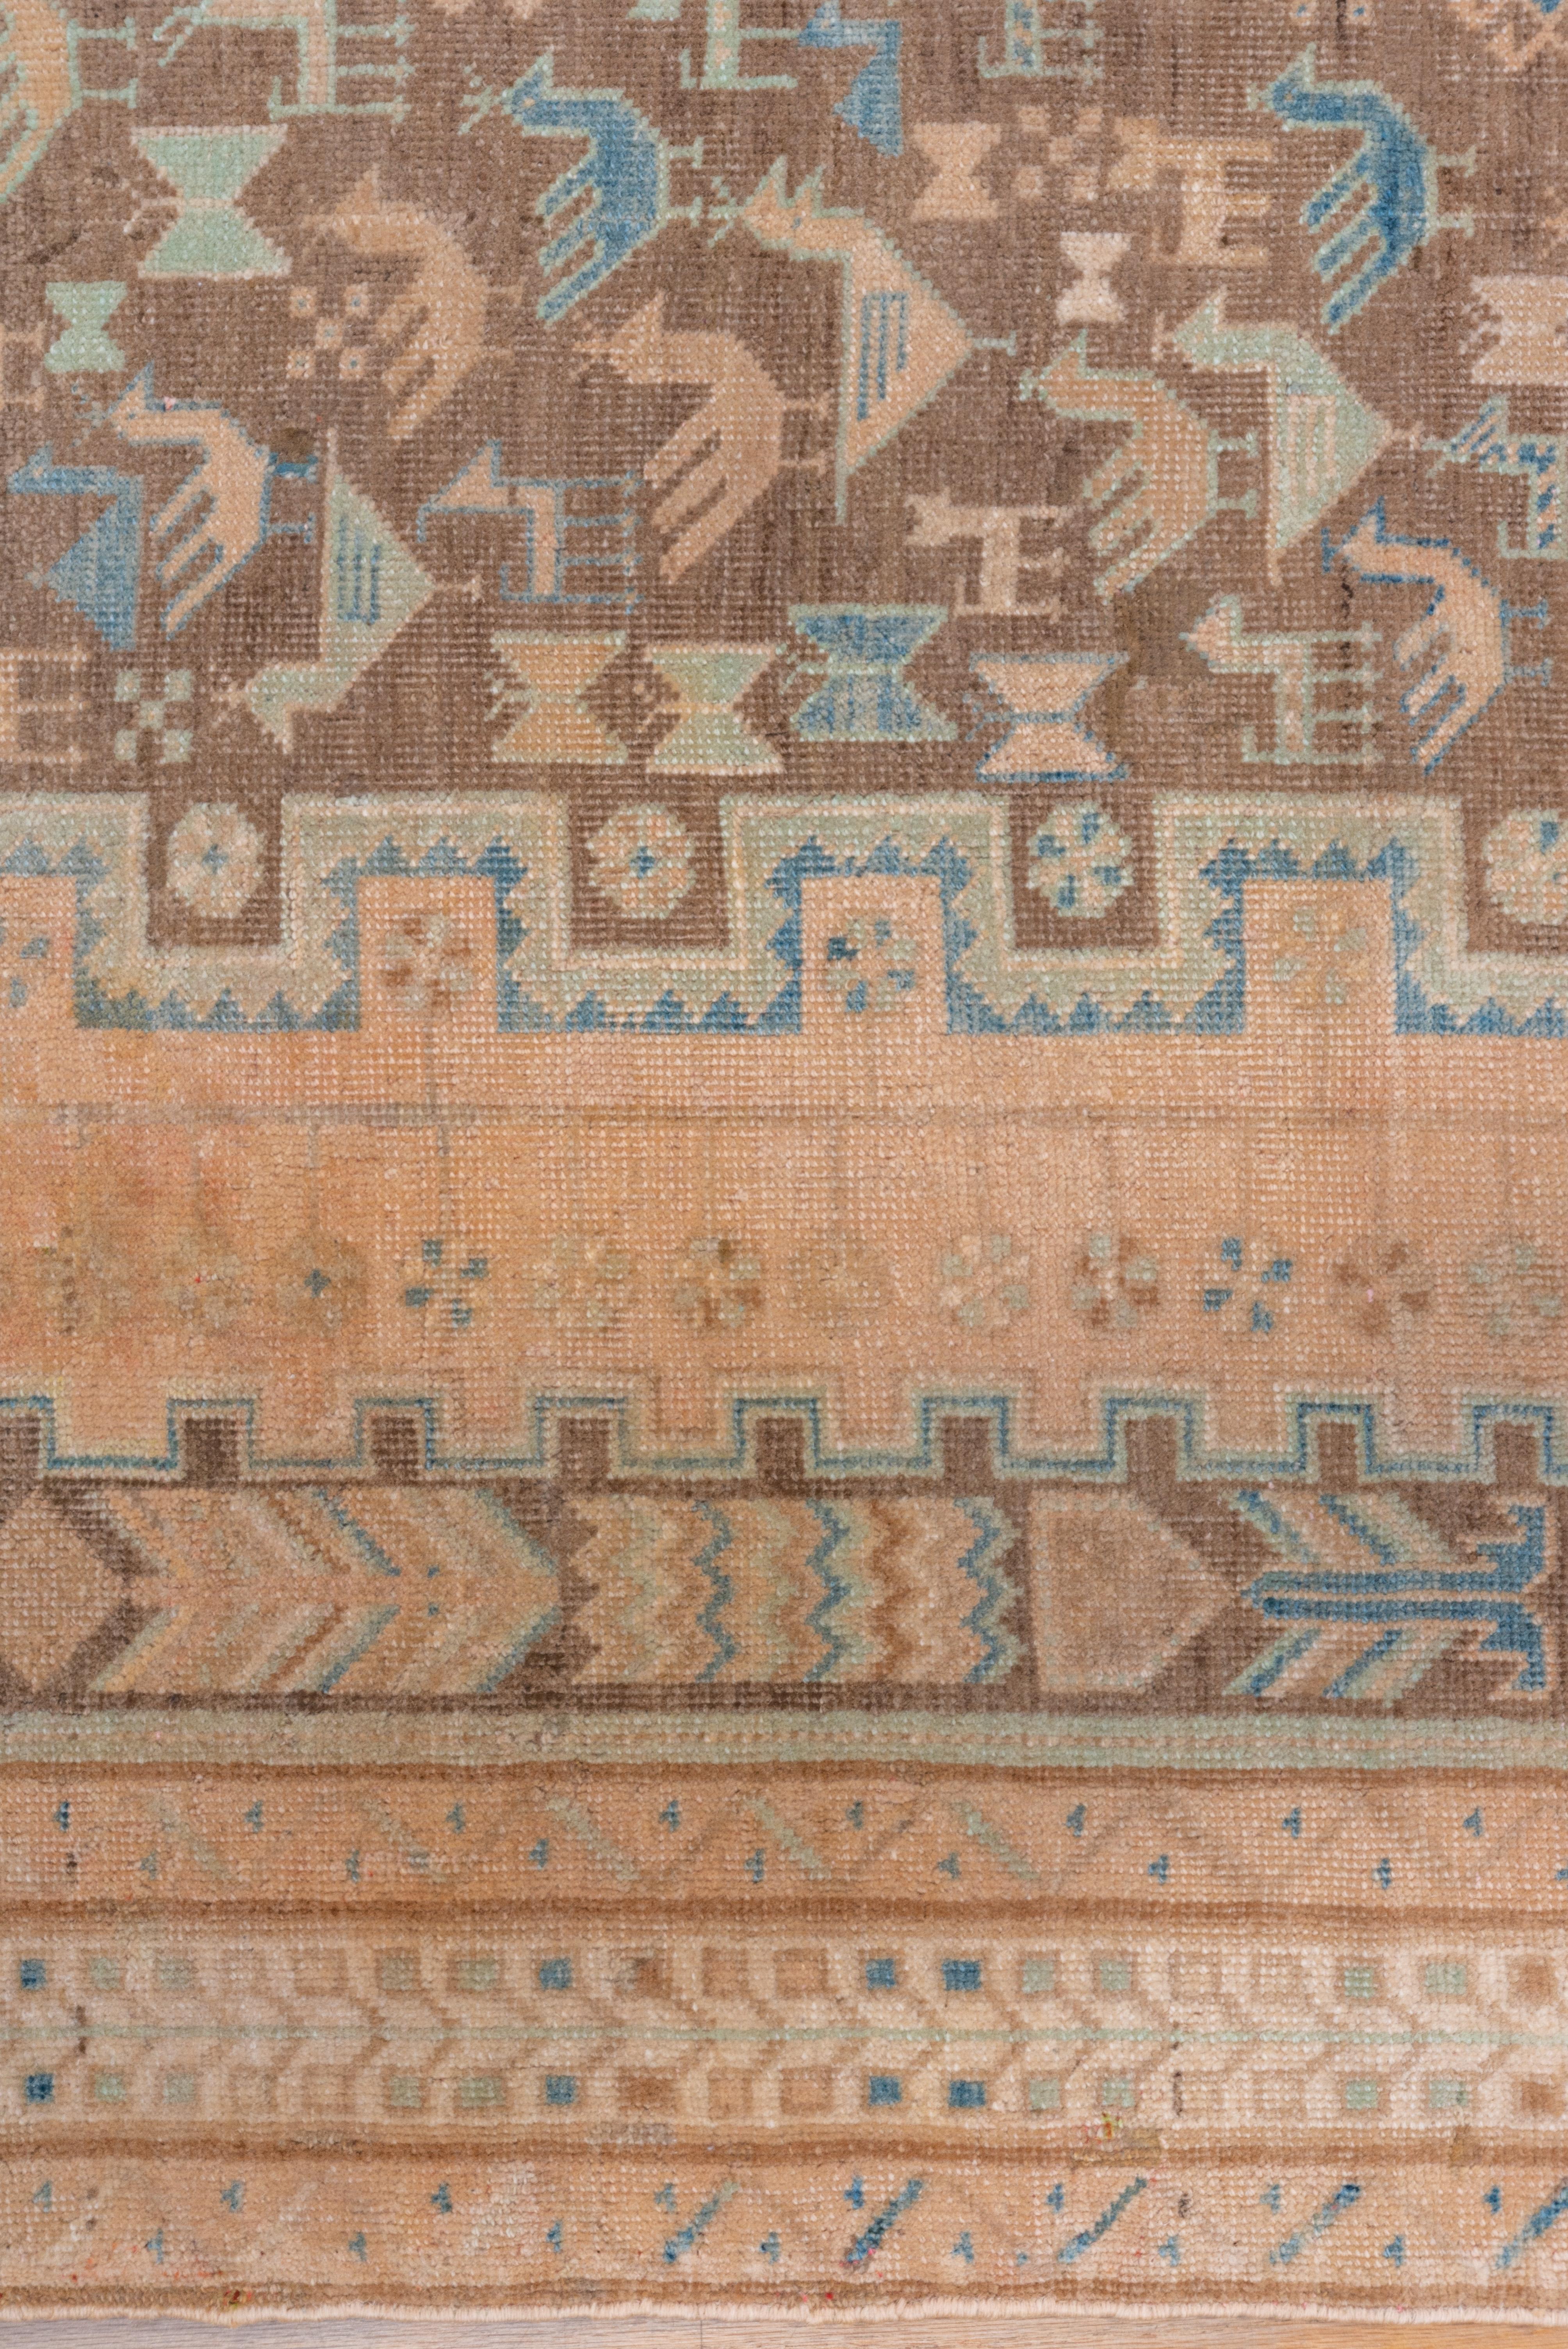 Tribal Stunning Vintage Persian Afshar Pictoral Rug, Peach, Seafoam & Blue Tones